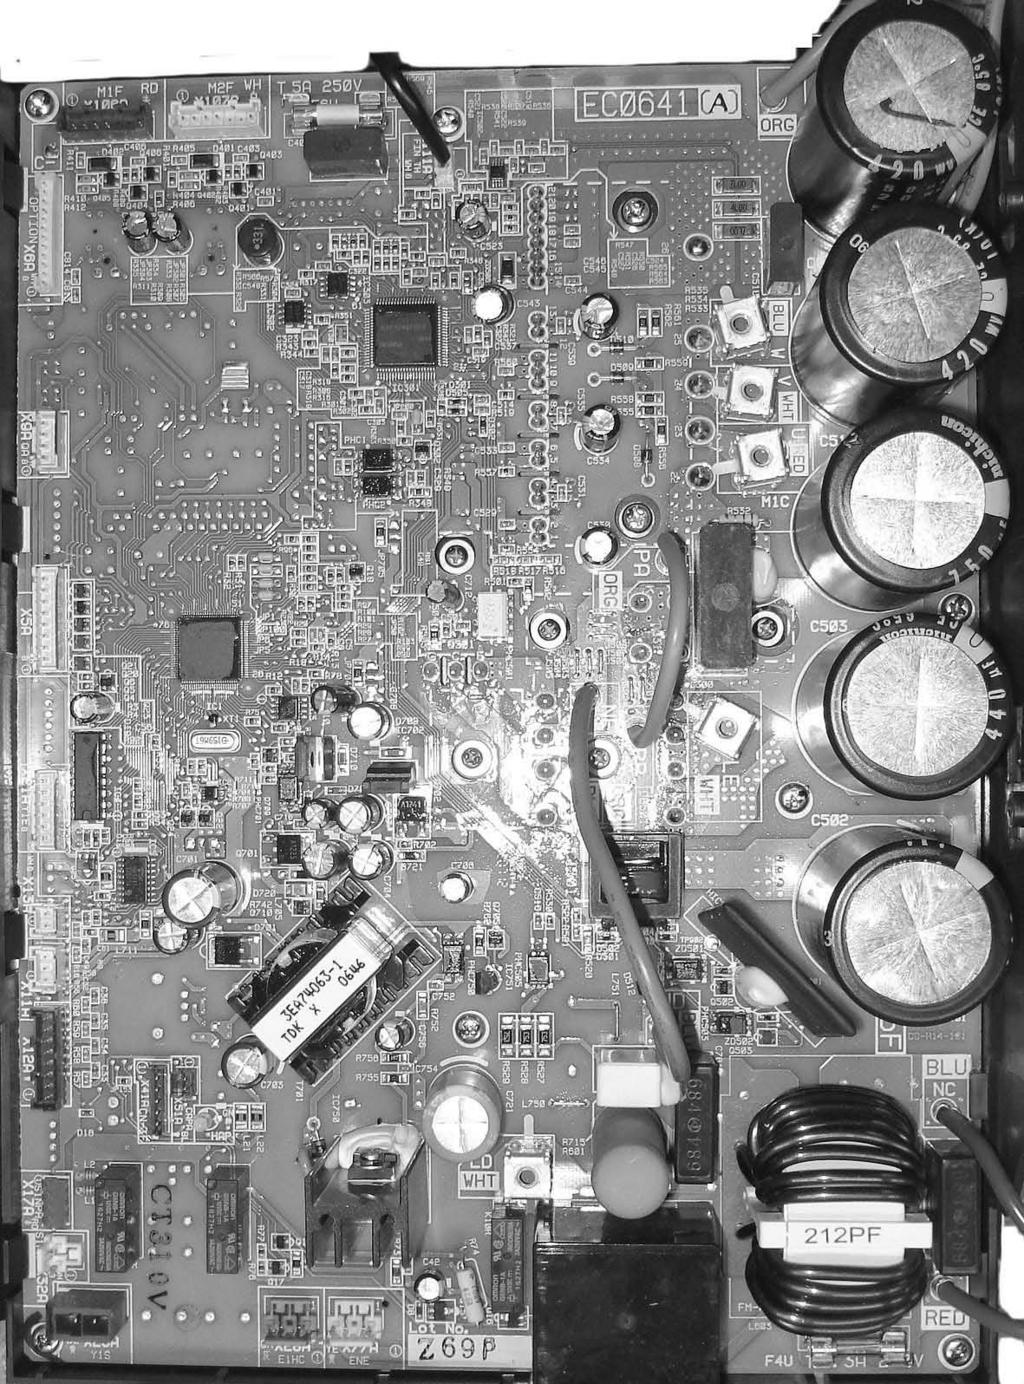 ESIE08-0 PCB Layout Control & inverter PCB (AP) The picture below shows the PCB connectors.